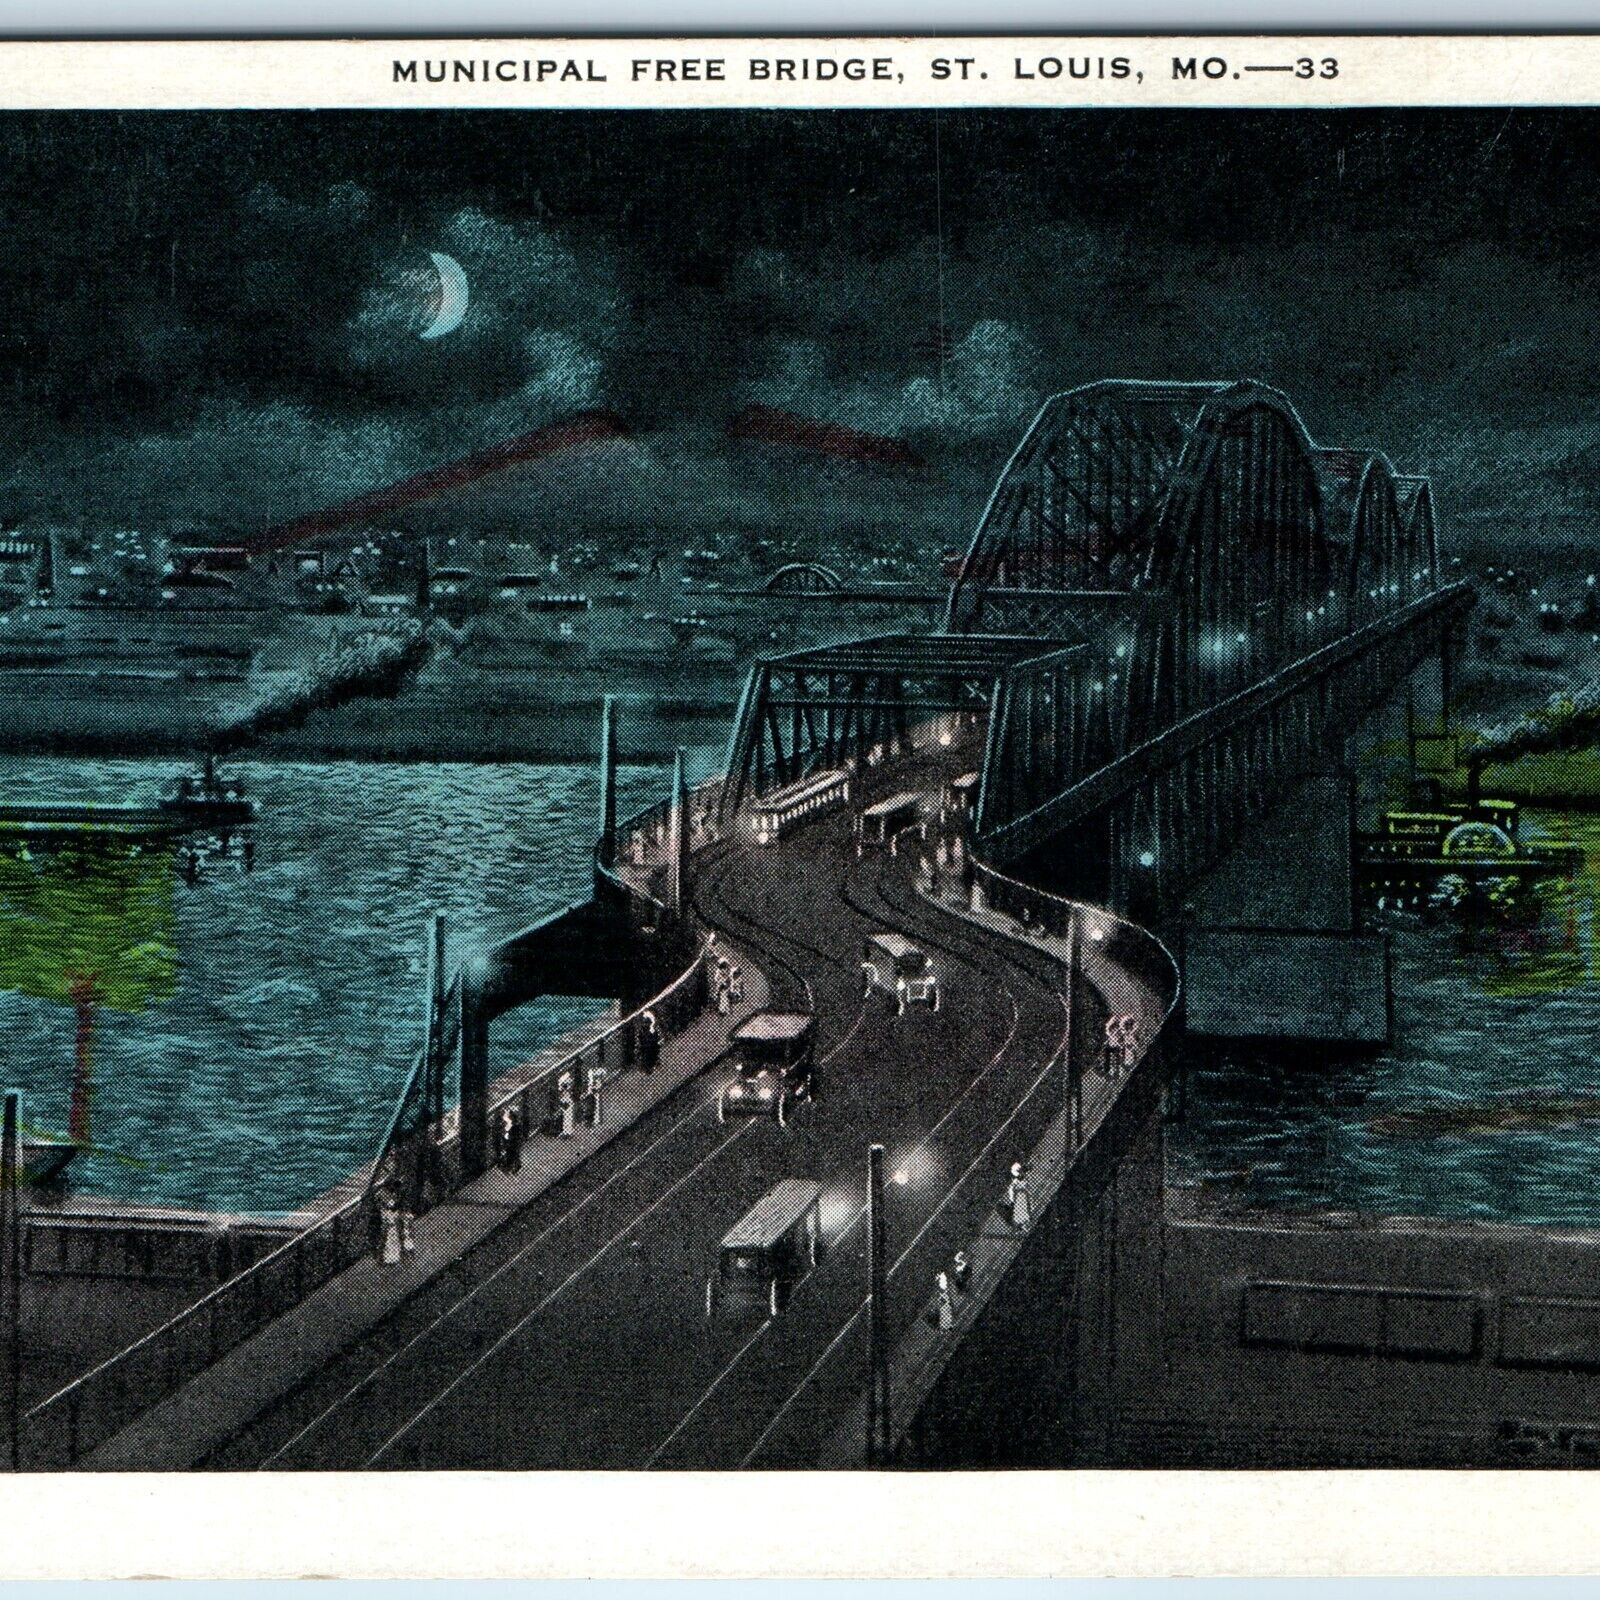 c1910s St. Louis, MO Night Roadside Bridge Scene Touring Cars Headlights PC A242